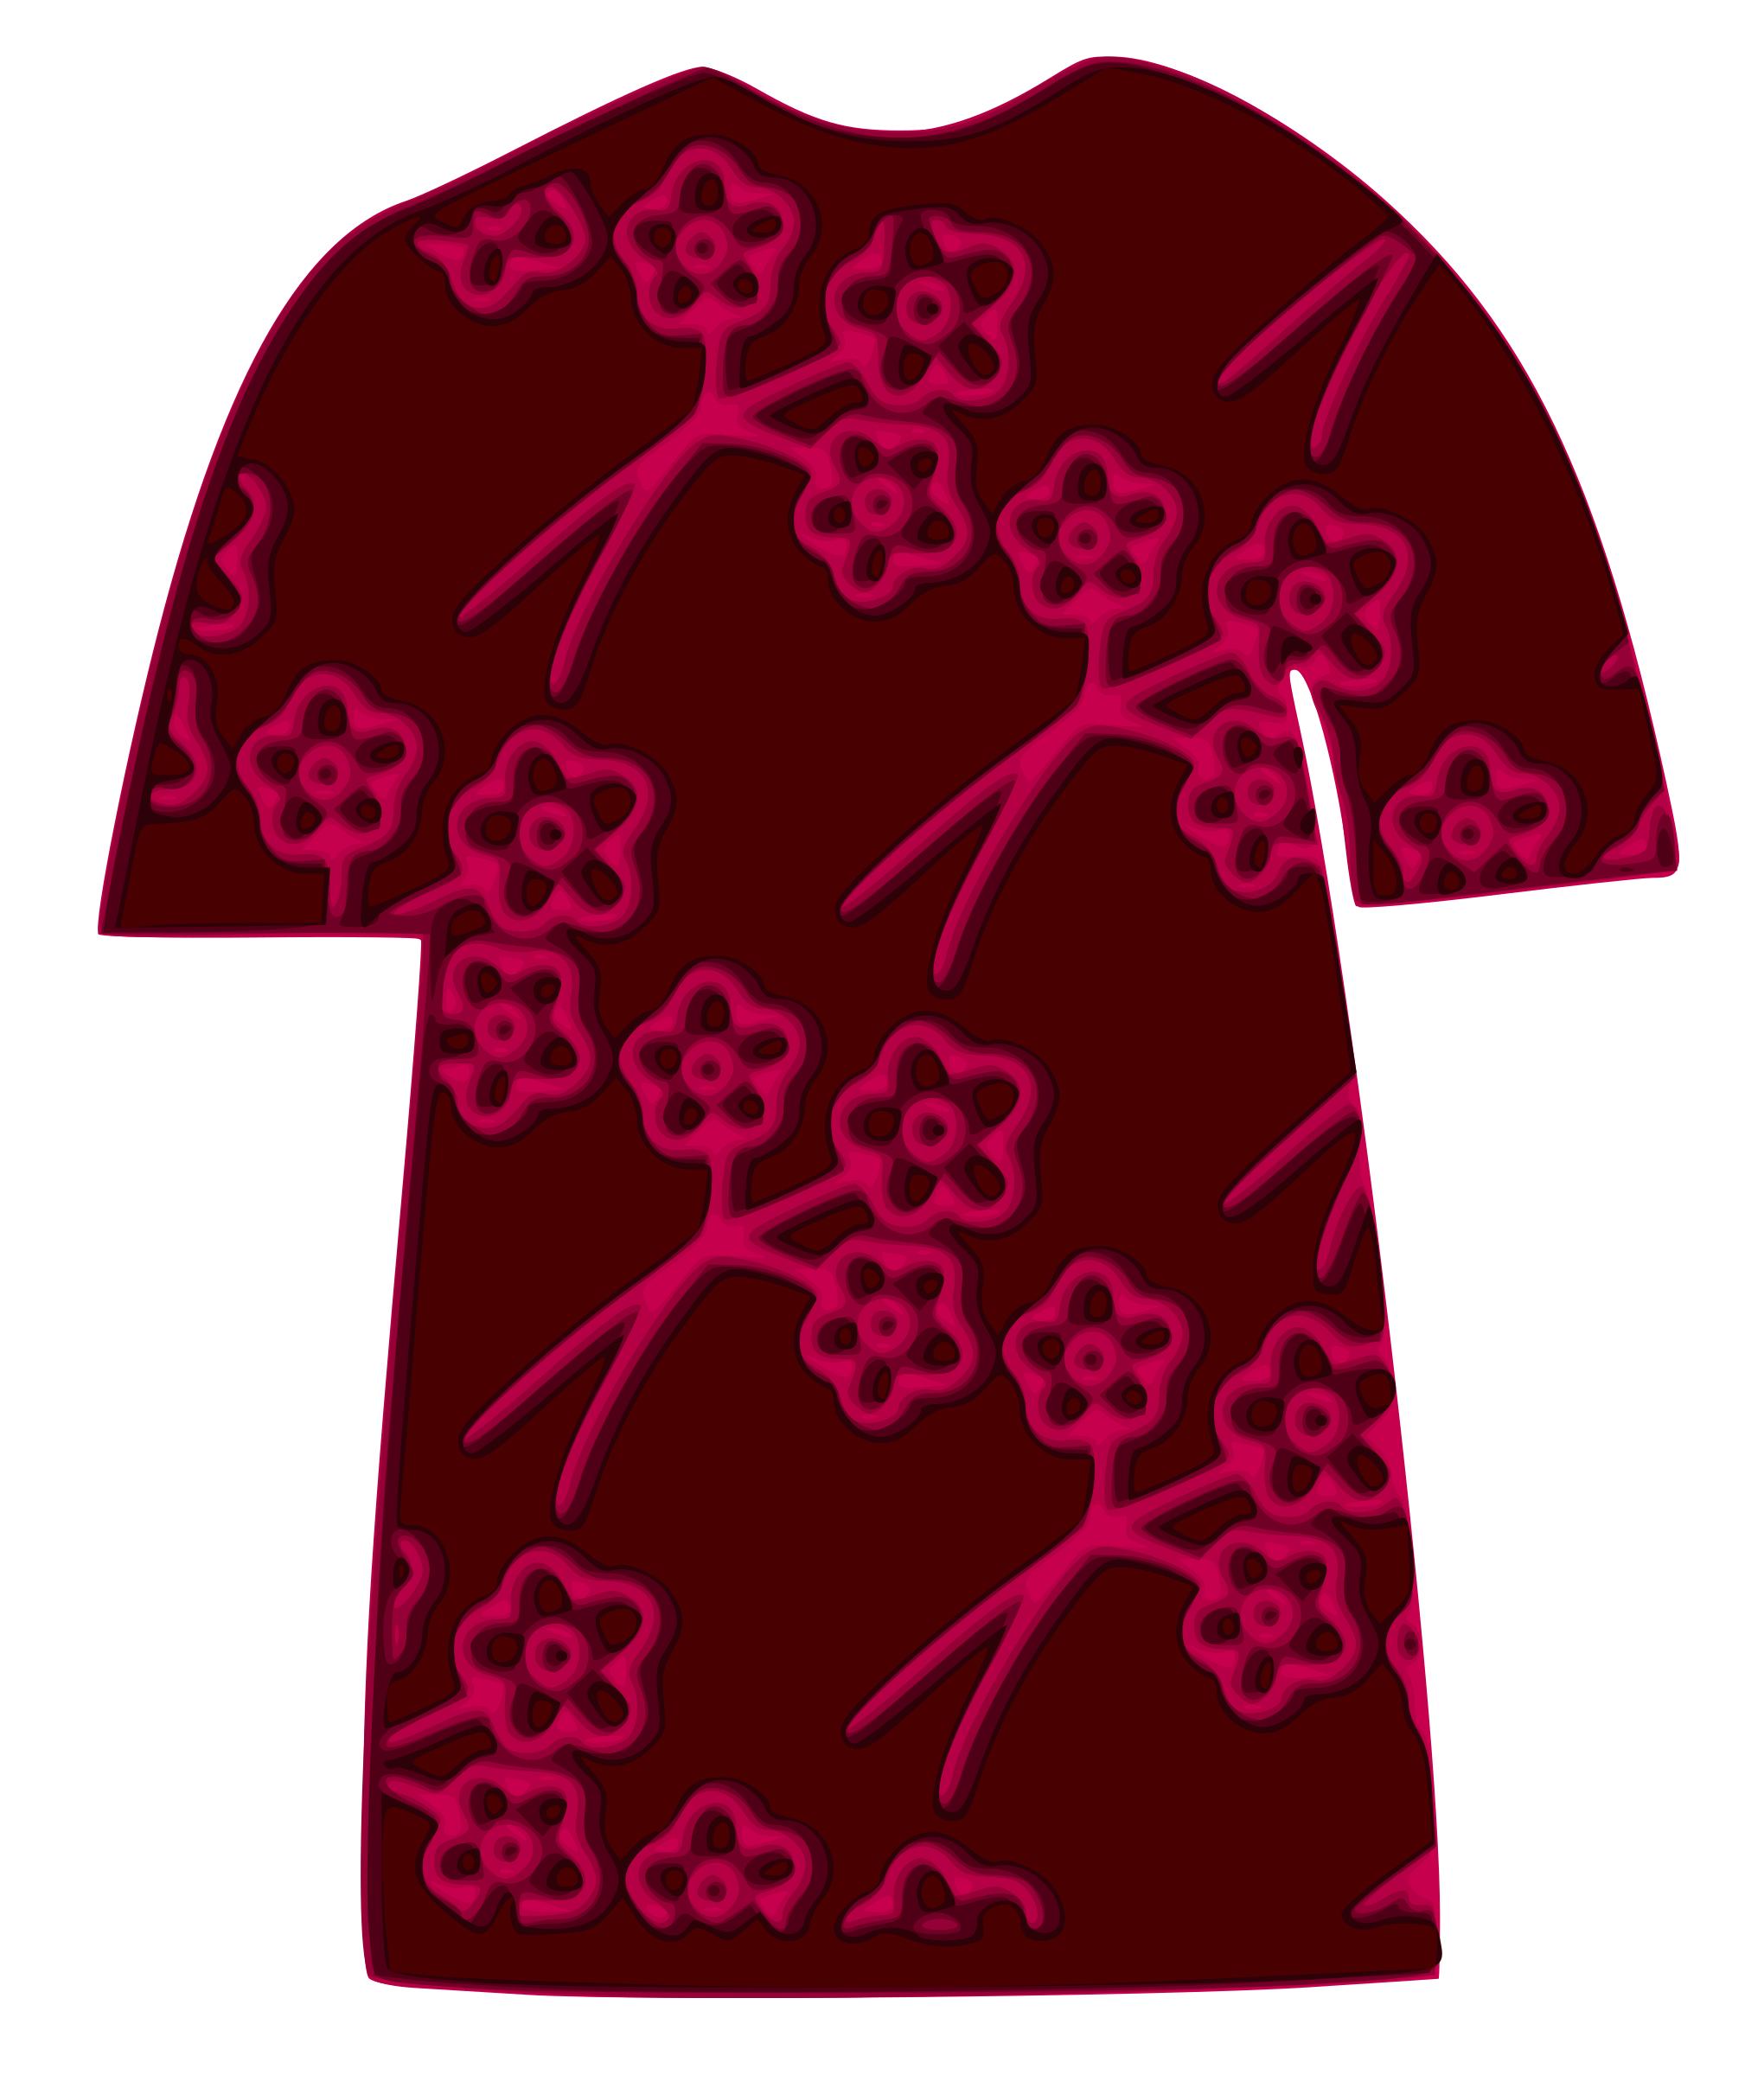 Tshirt-plum-pattern 02 png